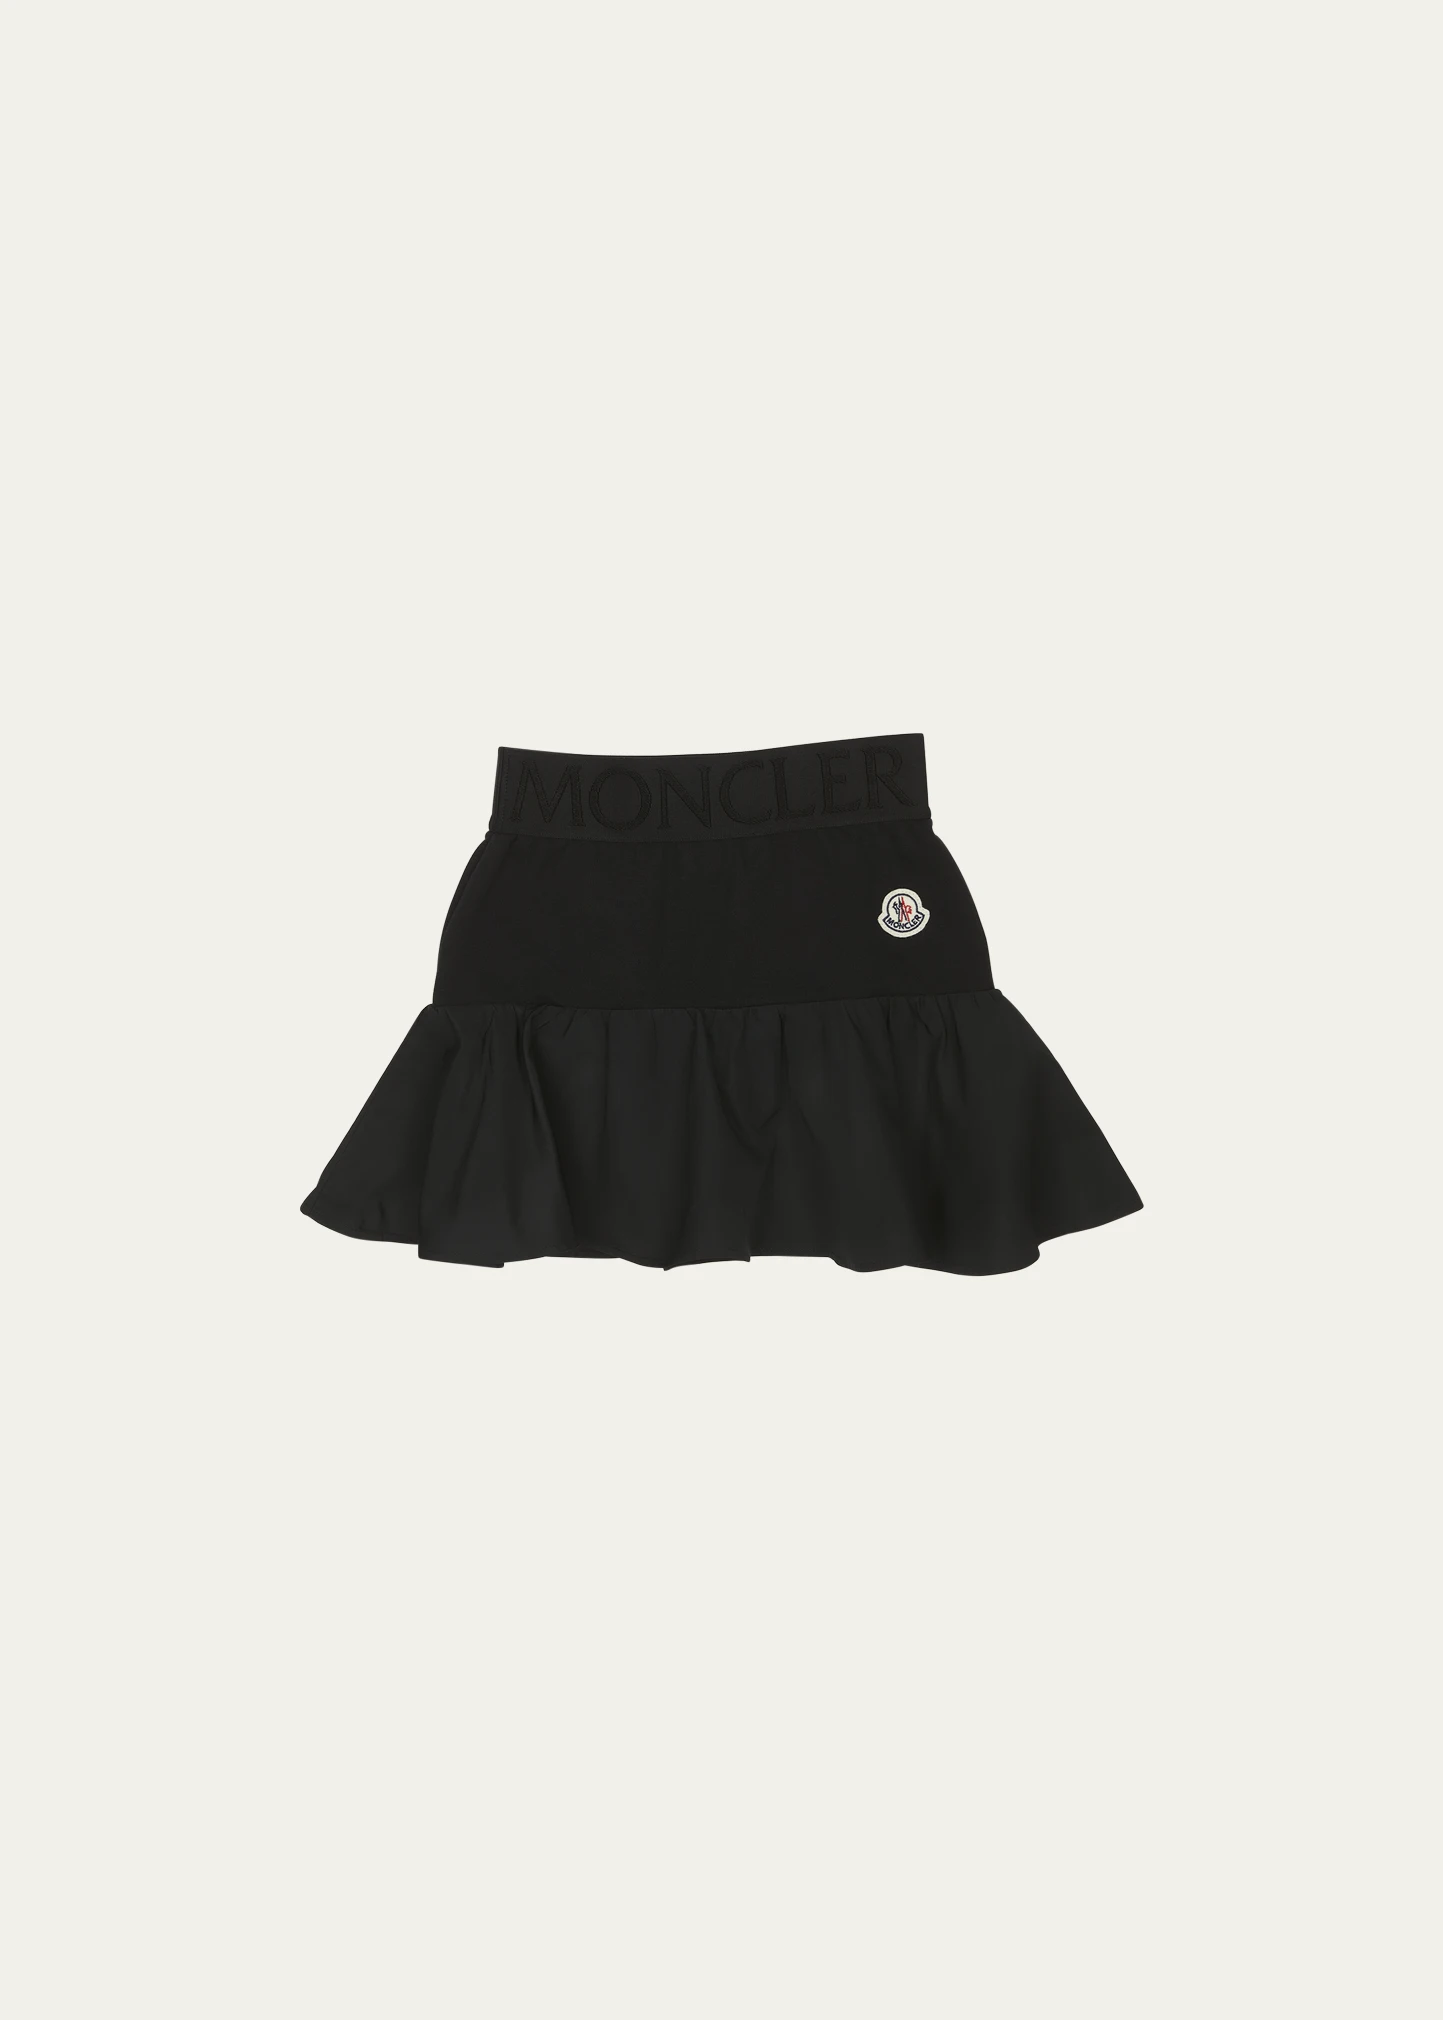 Moncler skirt black J19548H00013_a